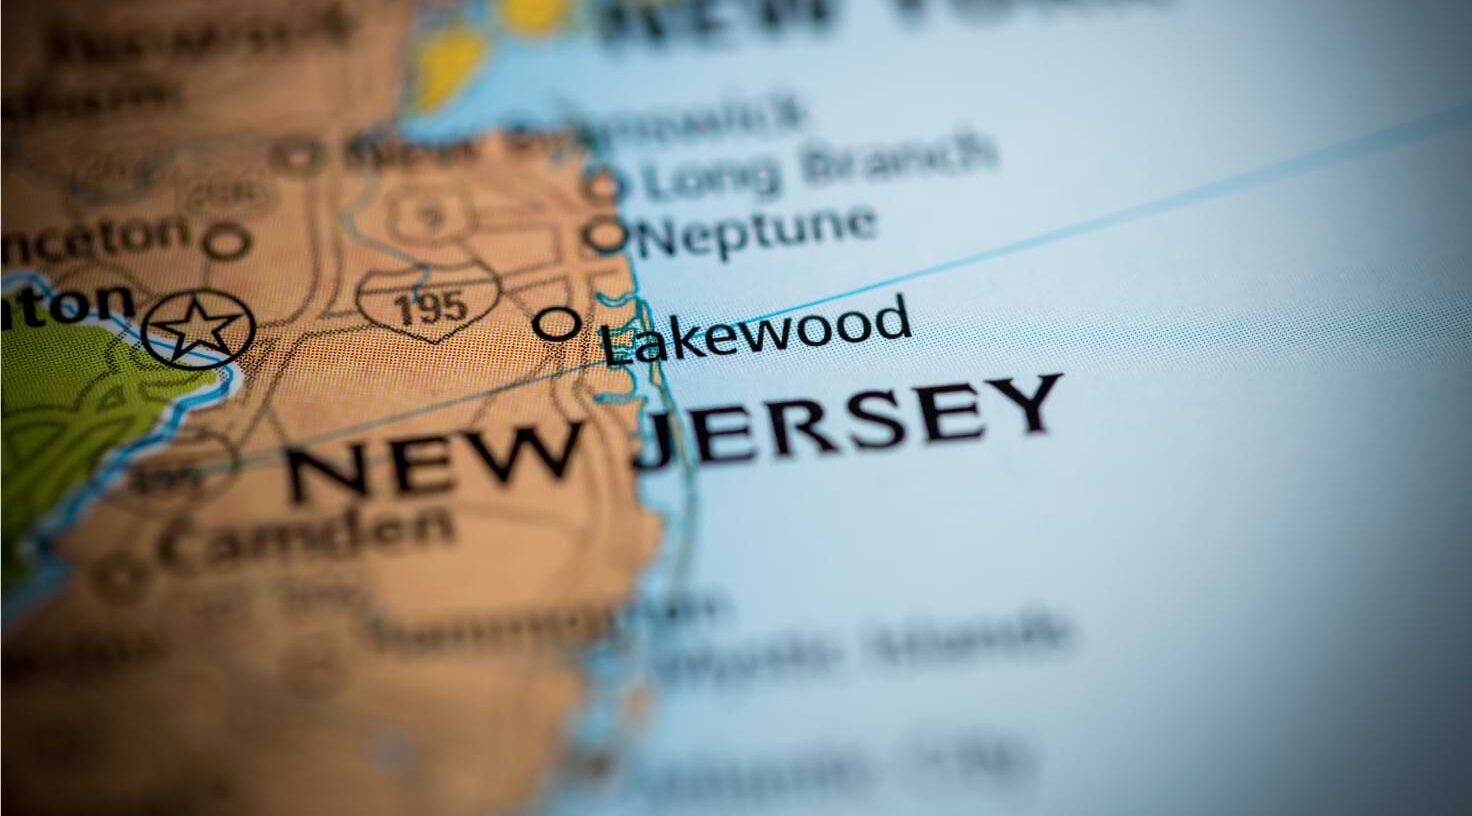 New Jersey Map Lakewood Aspect Ratio 1472 816